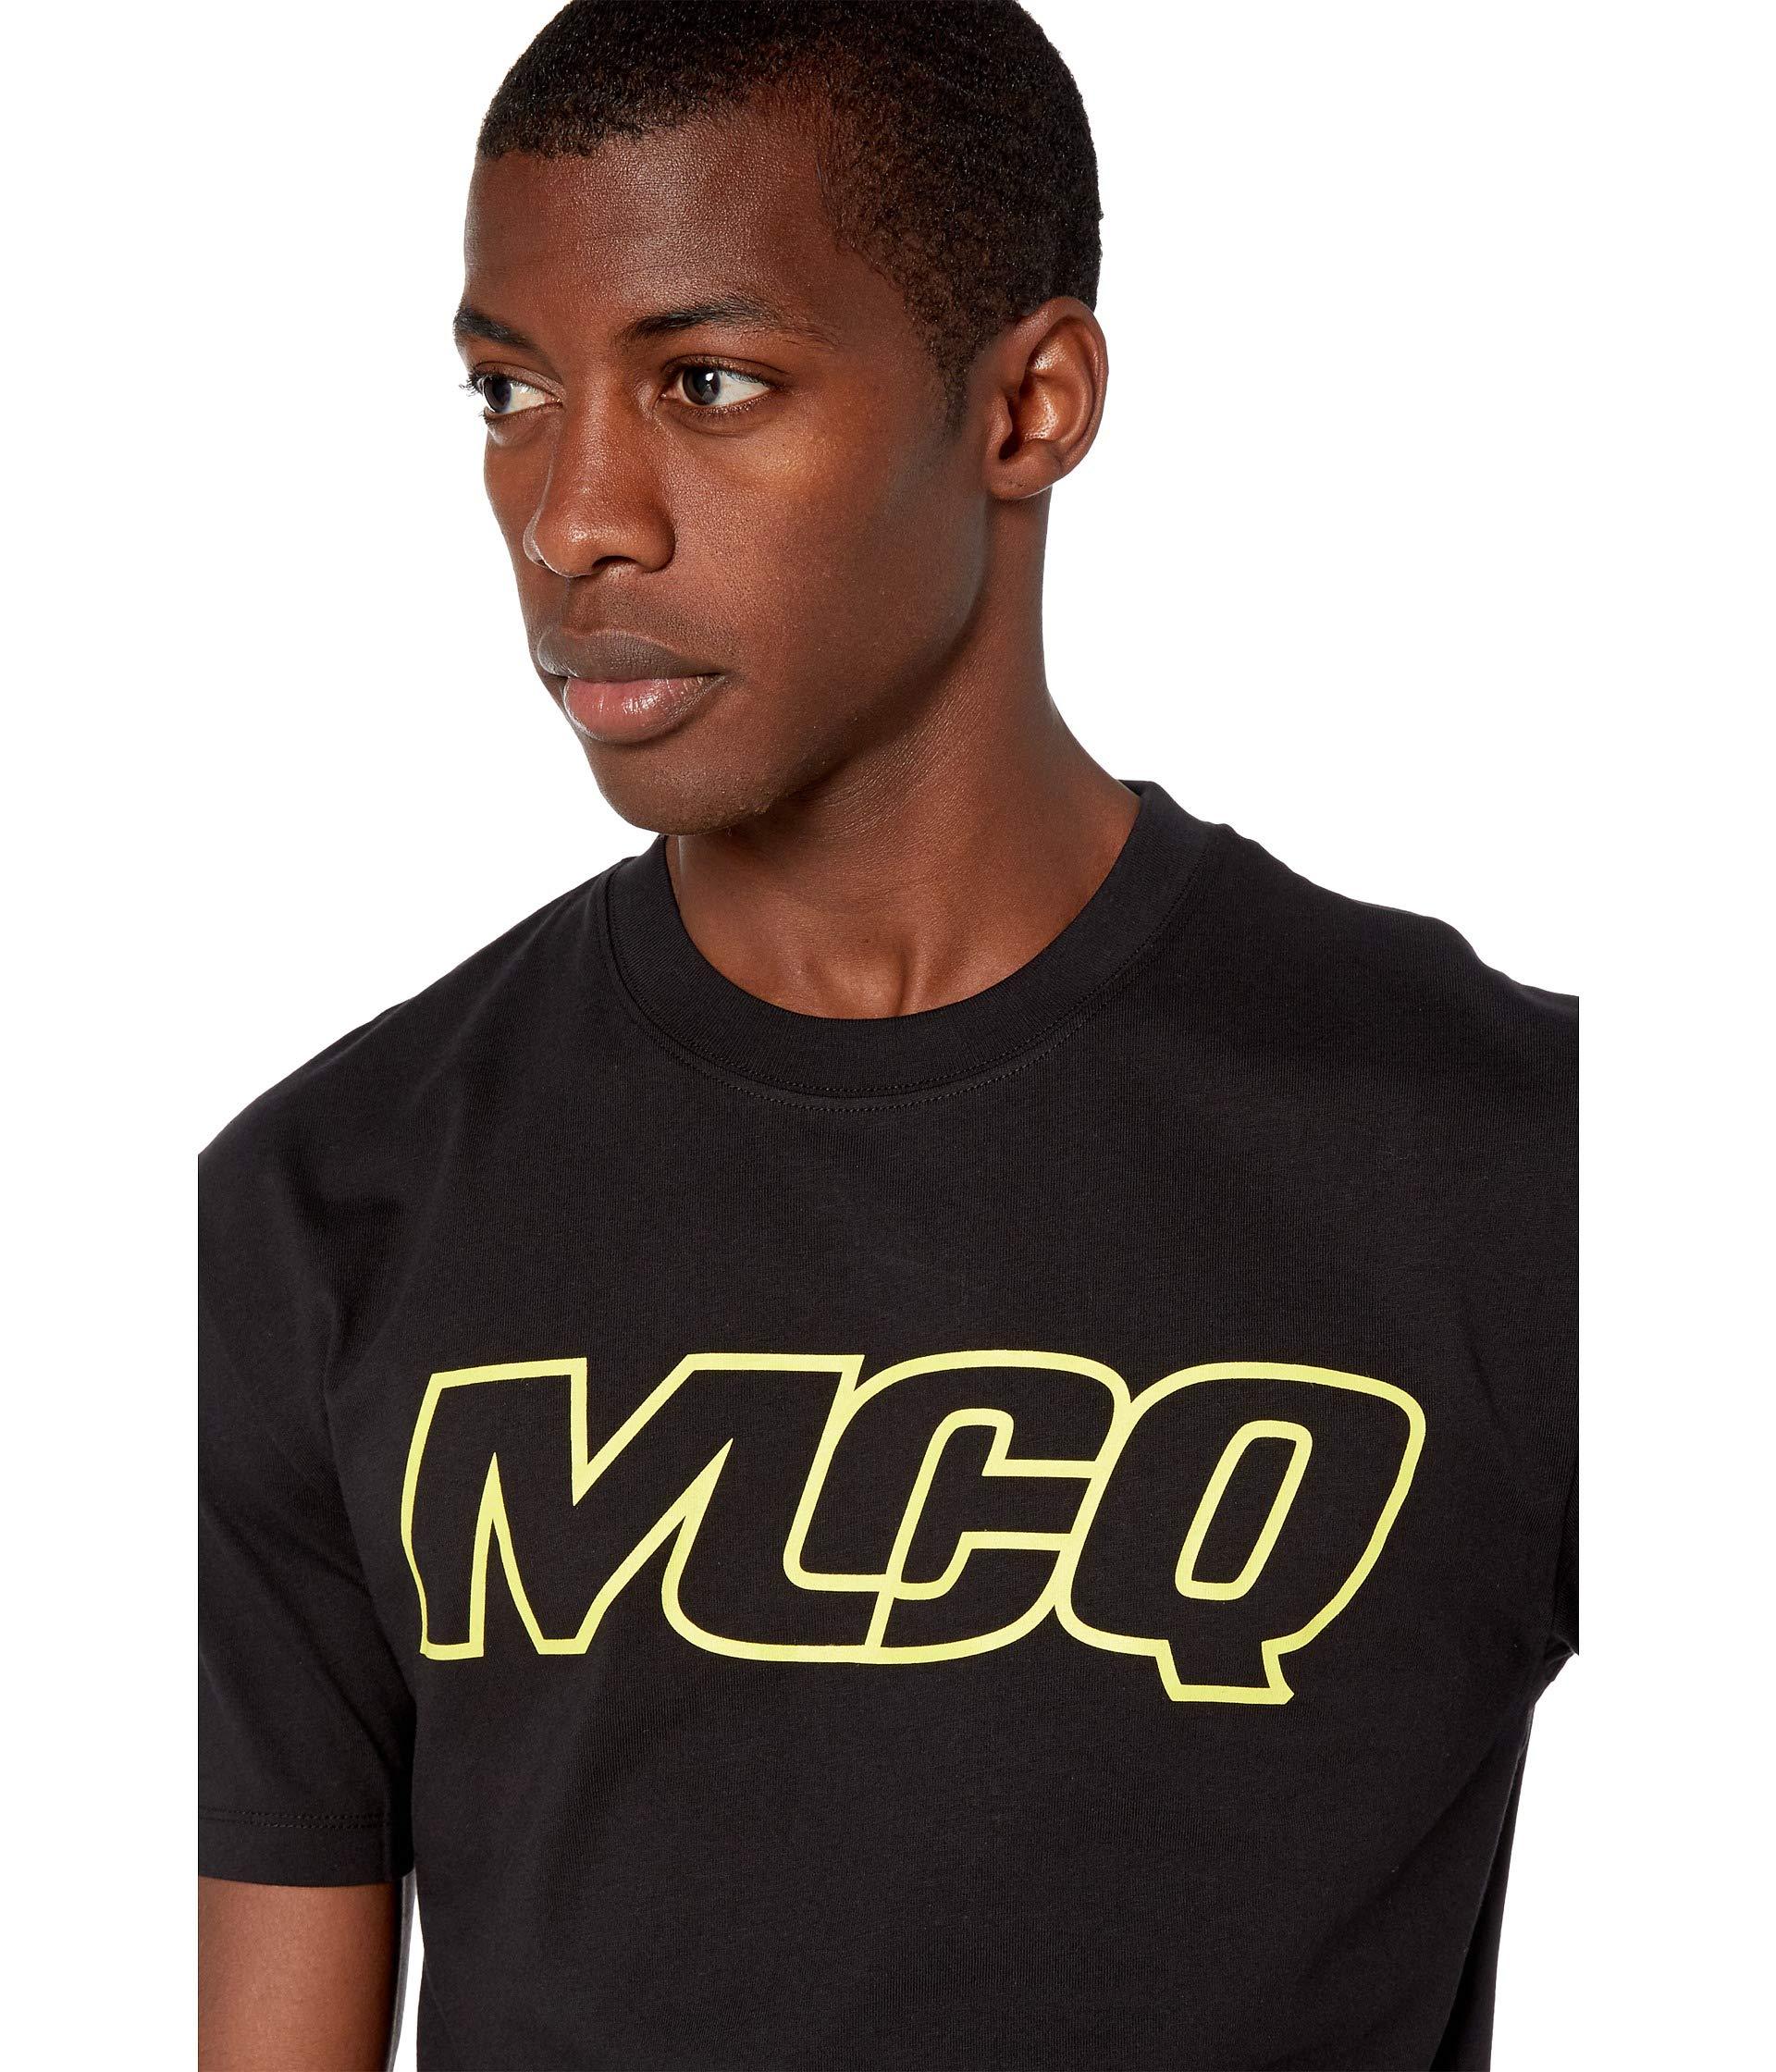 McQ Cotton Dropped Shoulder Logo T-shirt in Black for Men - Lyst